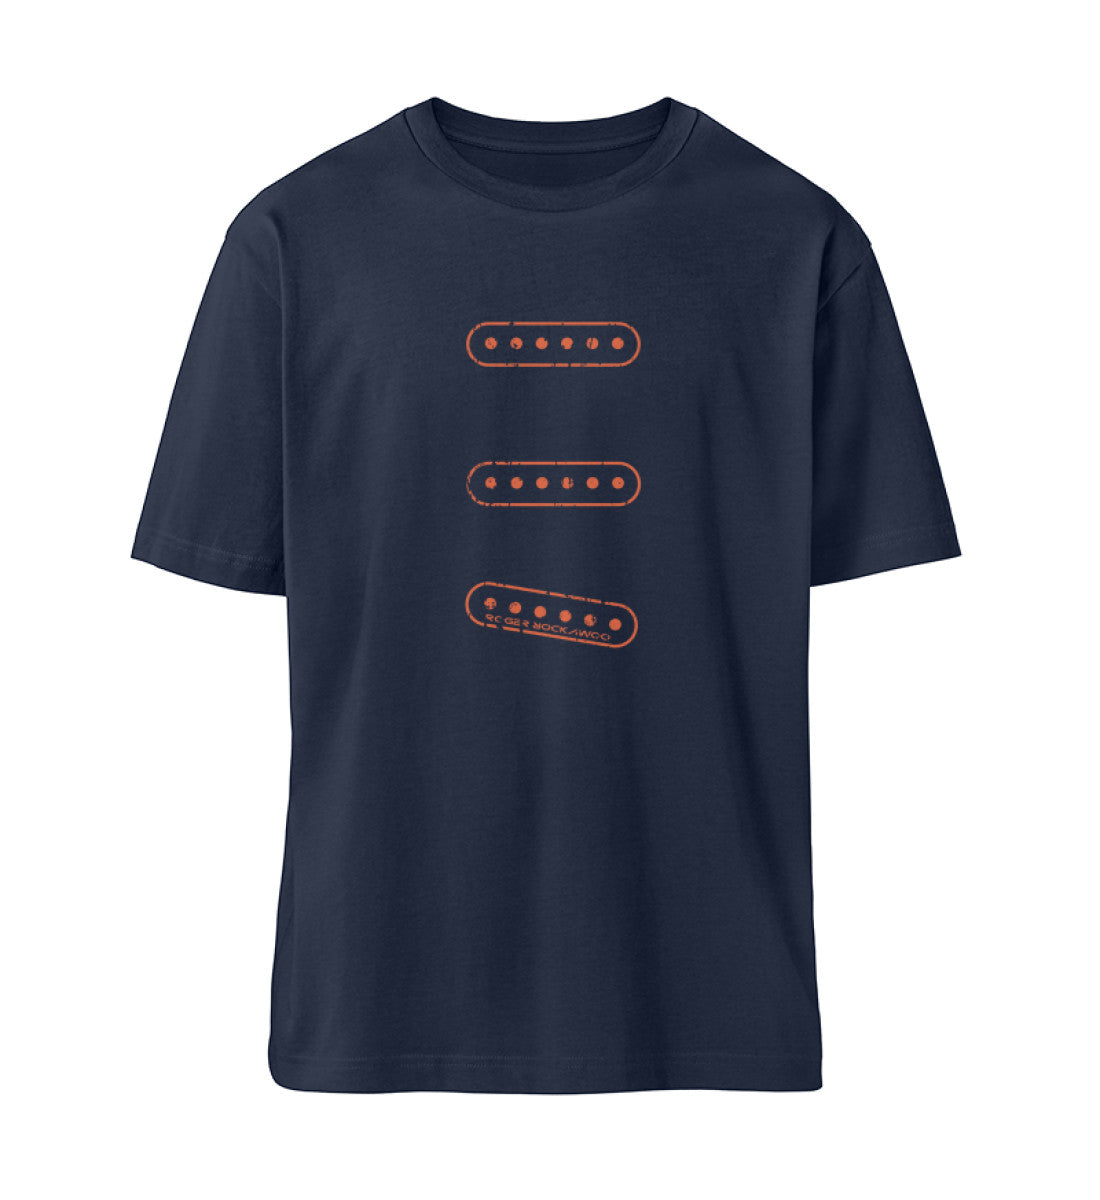 French Navy Blue T-Shirt Unisex Relaxed Fit für Frauen und Männer bedruckt mit dem Design der Roger Rockawoo Kollektion E-Gitarren Single Coil Set Up